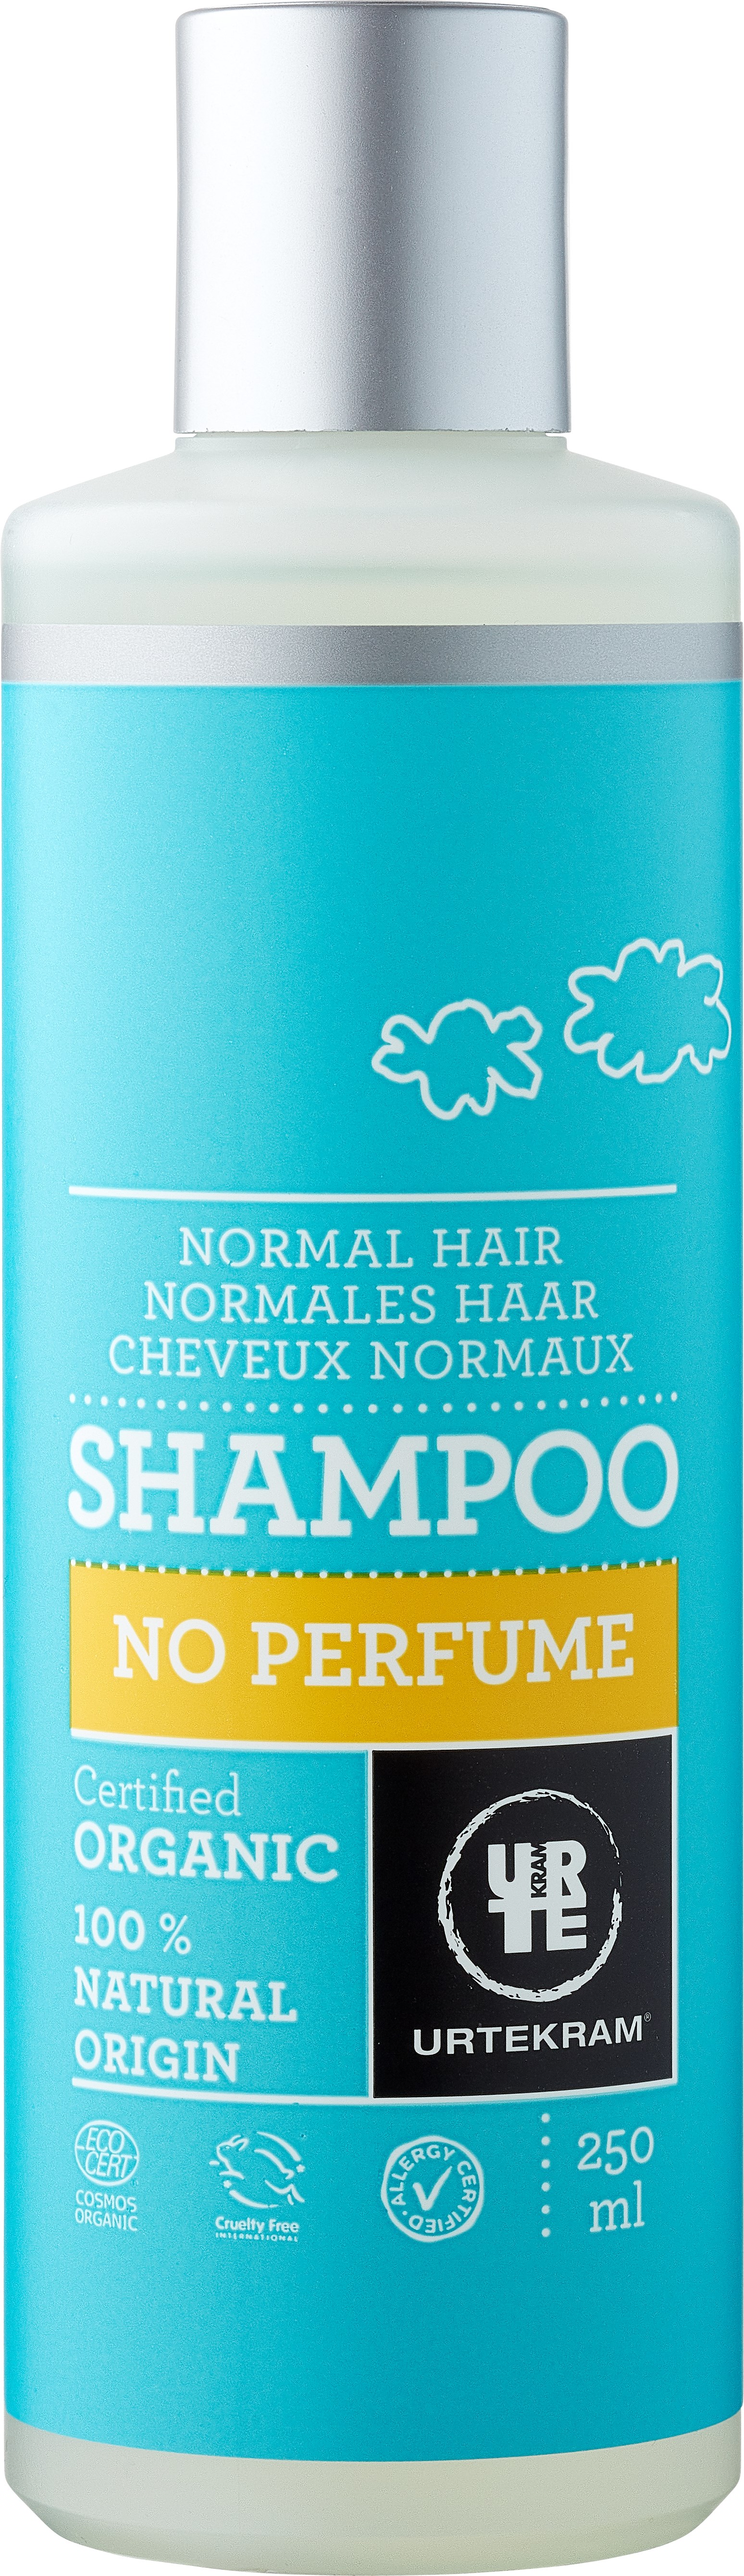 Urtekram No Perfume Shampoo 250ml